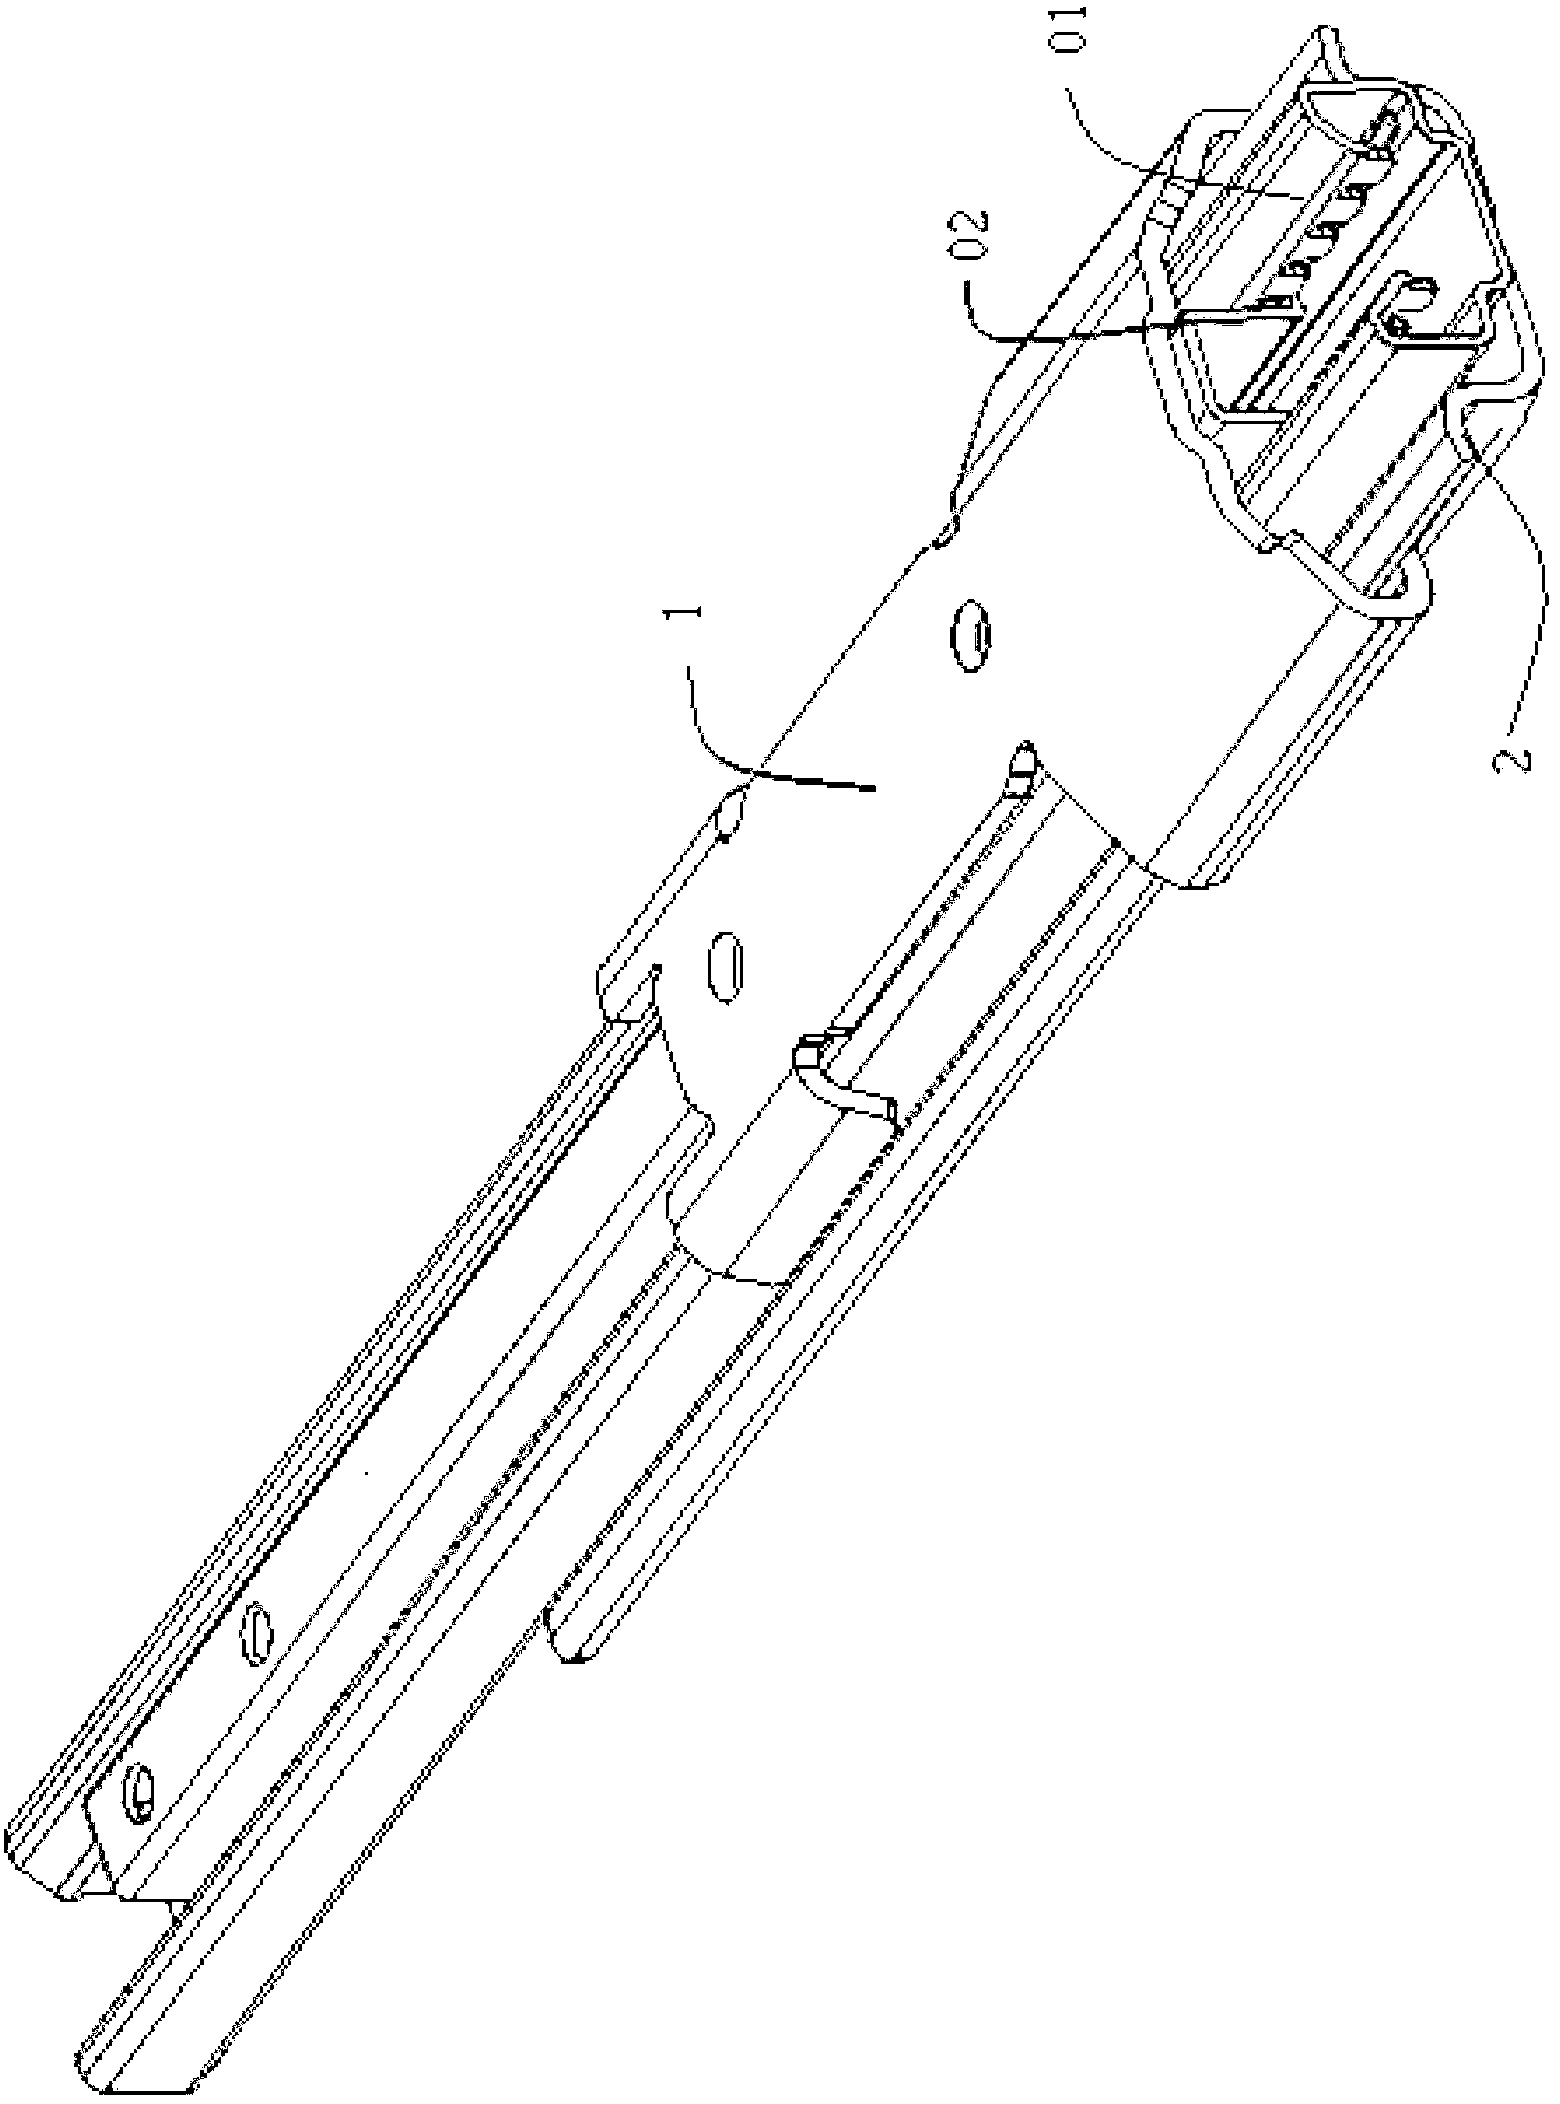 Automobile, automobile seat and siding rail mechanism of automobile seat